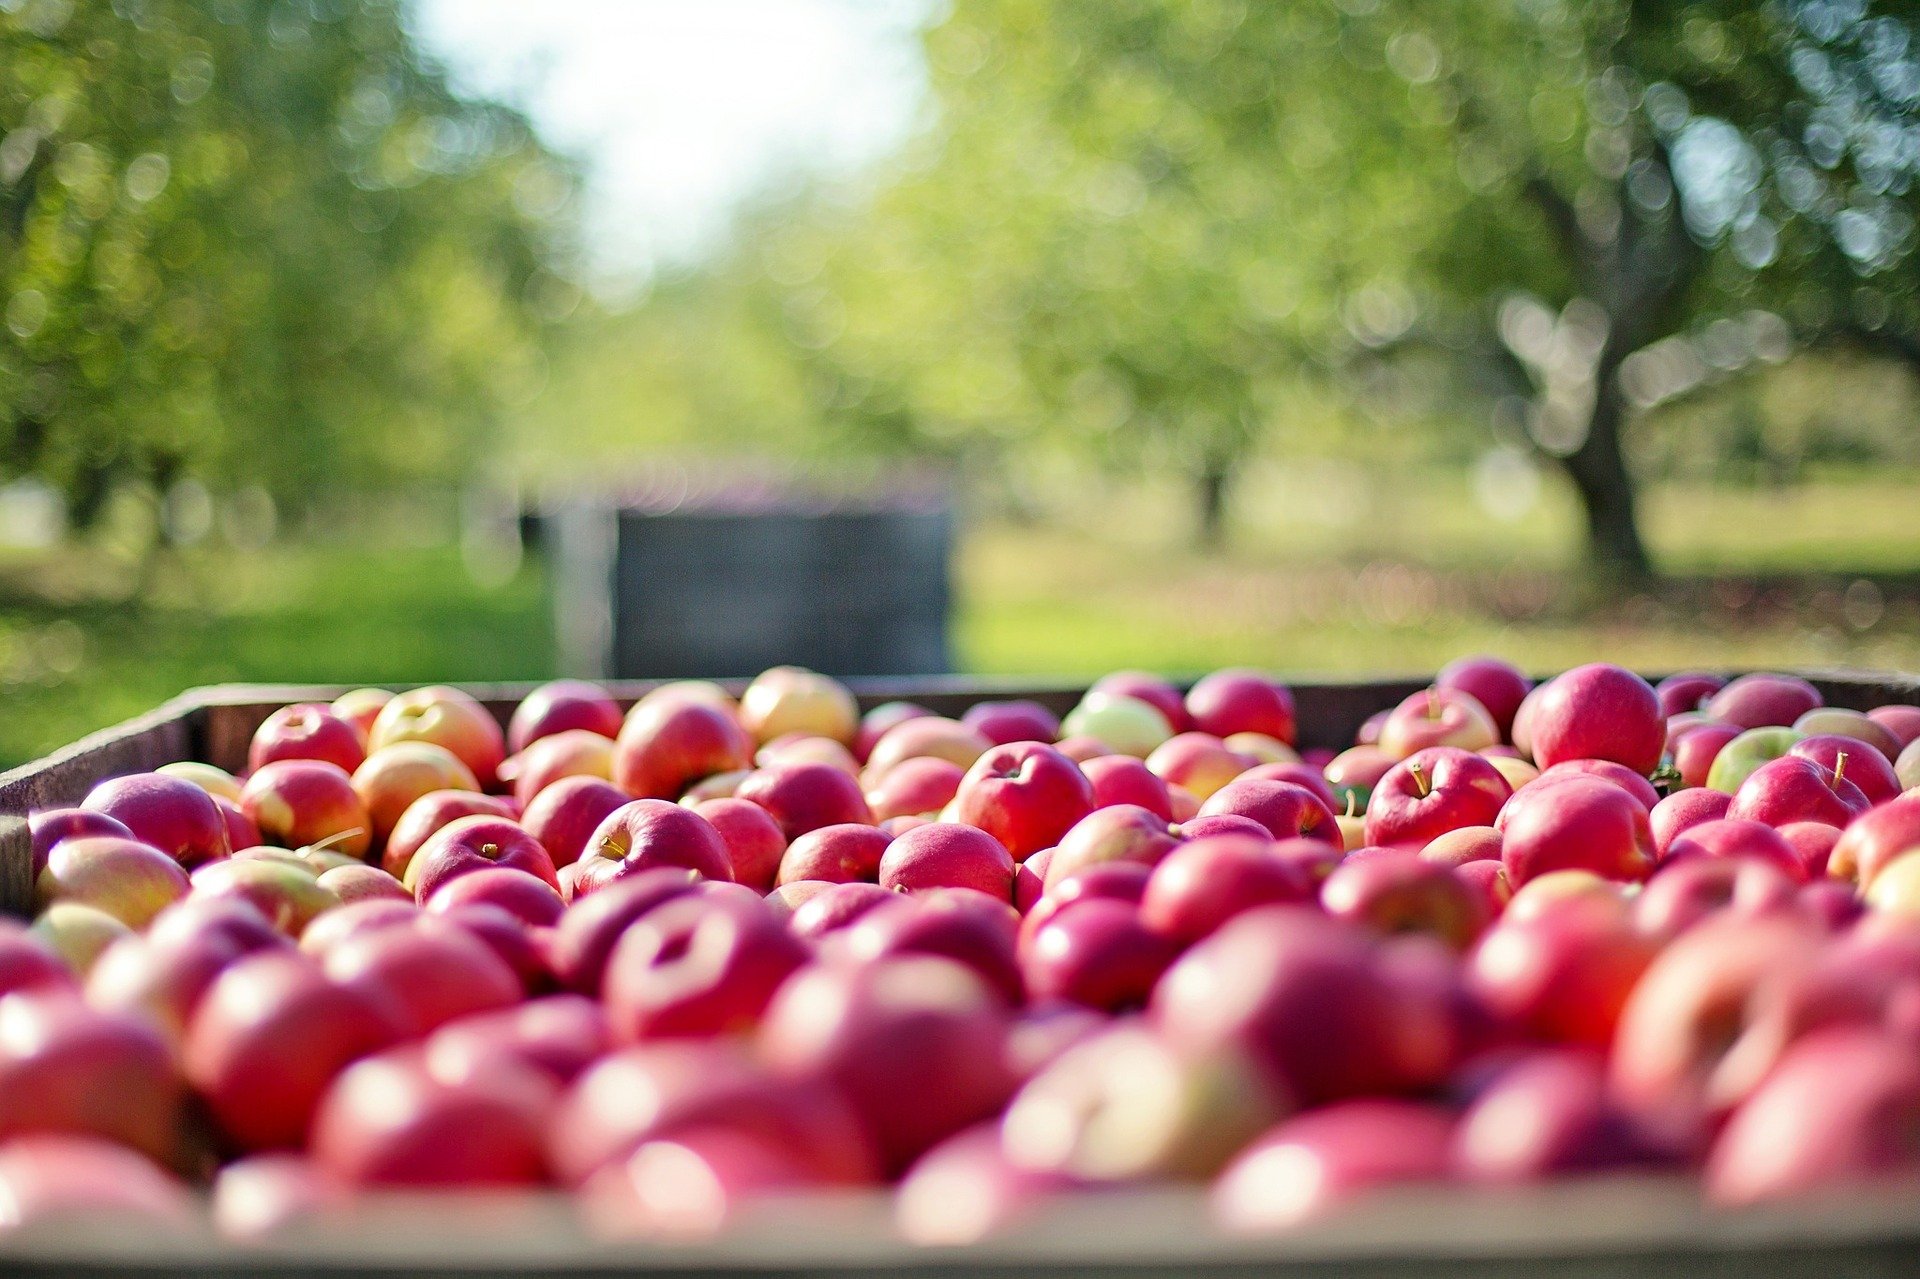 Apples in harvest